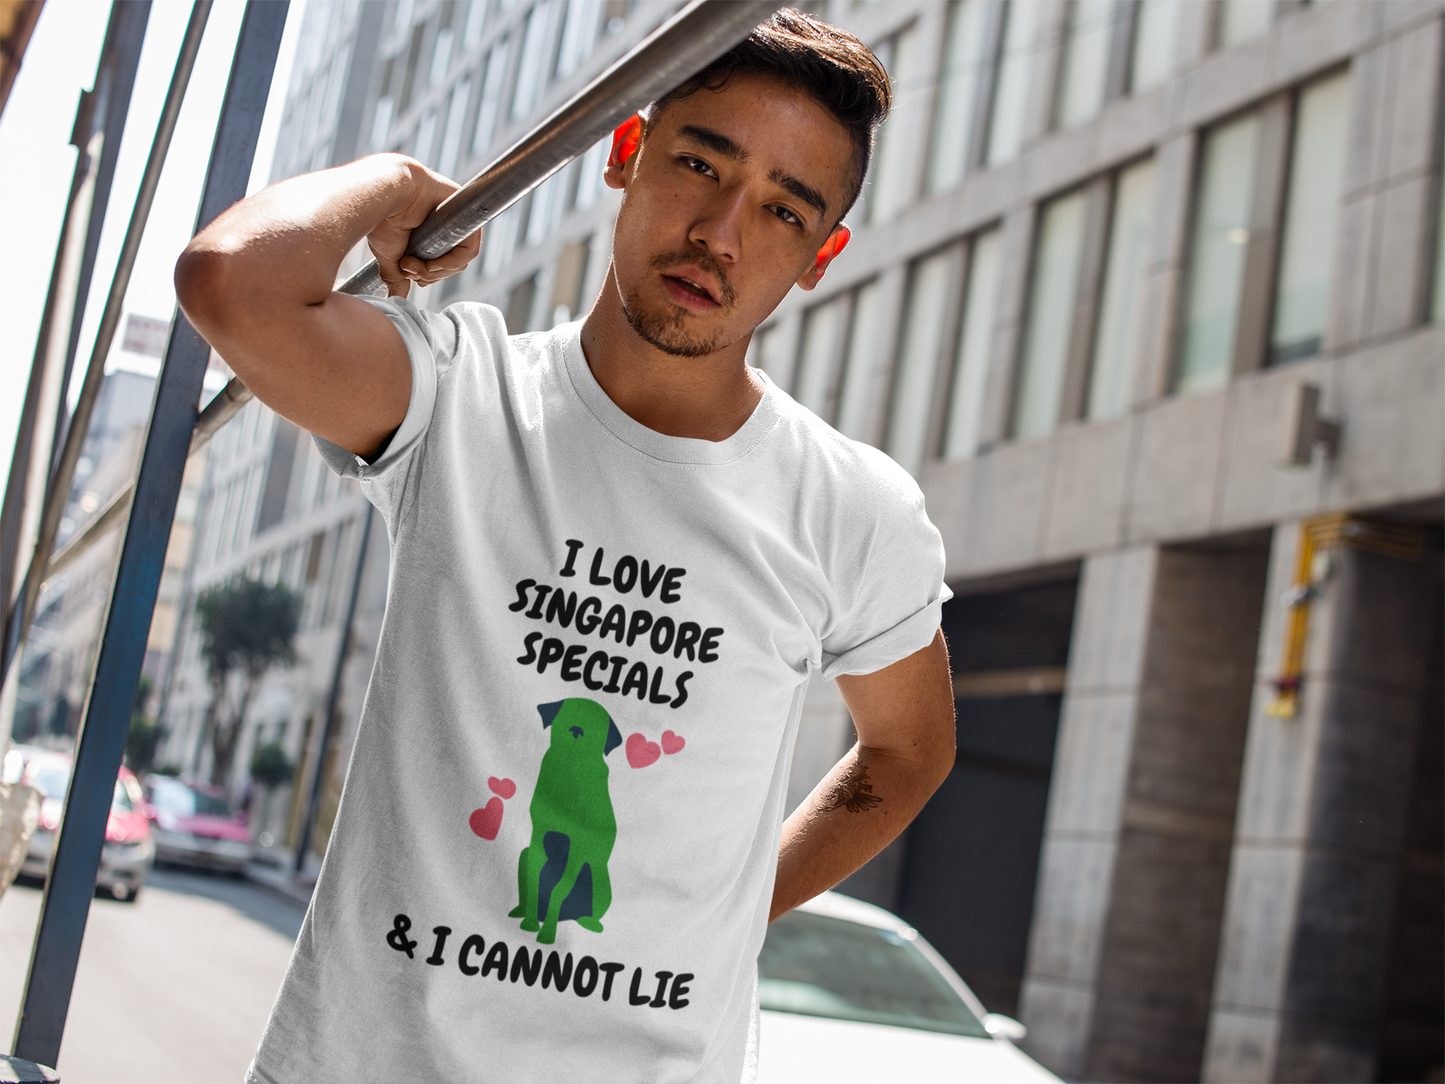 I Love Singapore Specials on Short-Sleeve Unisex T-Shirt